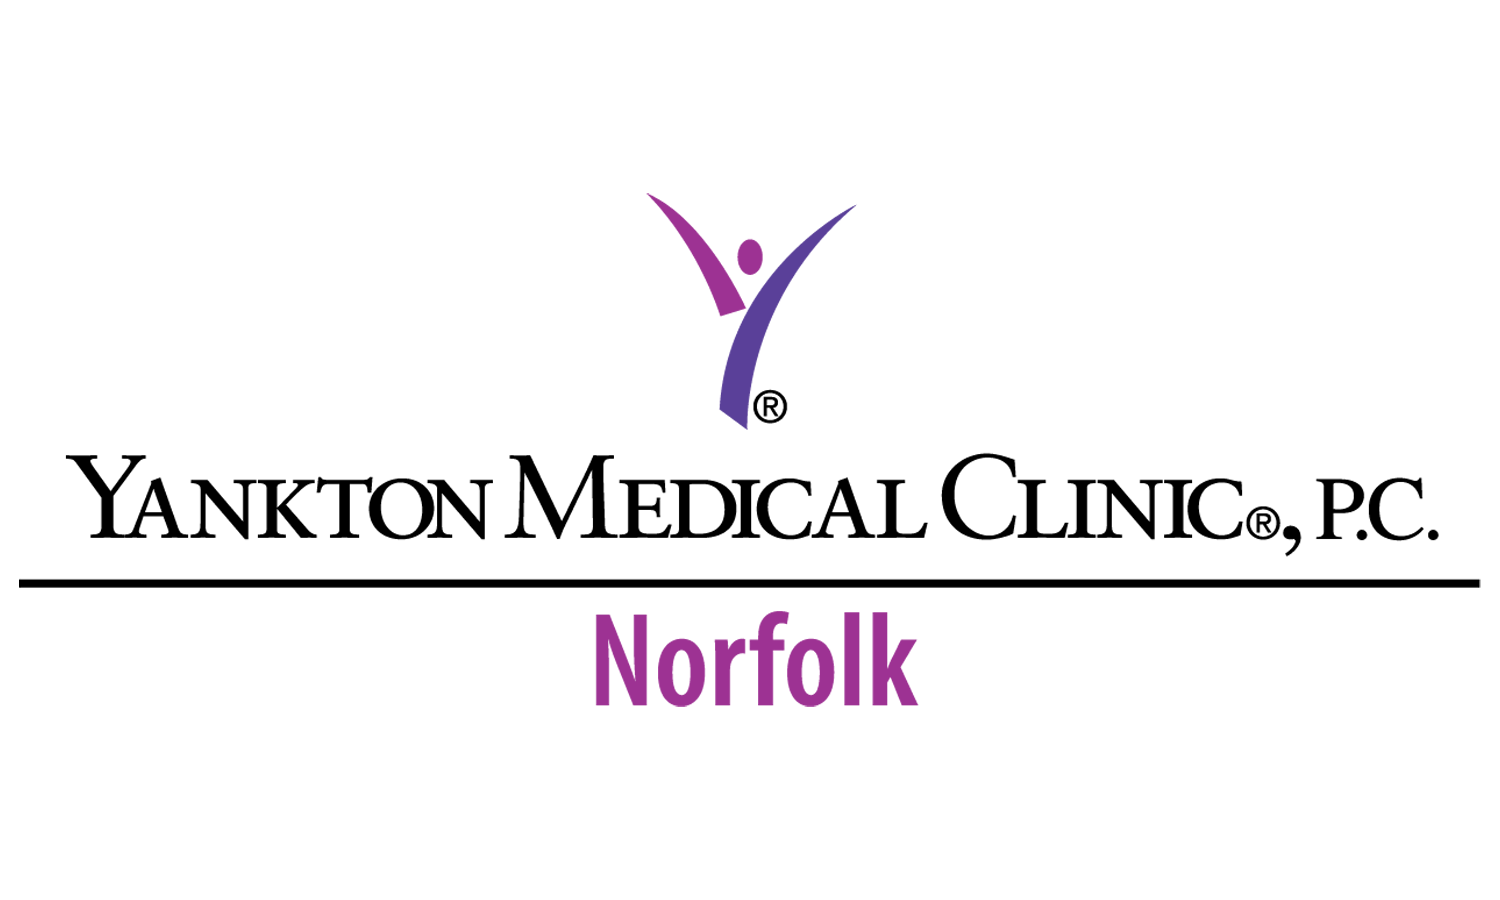 https://www.yanktonmedicalclinic.com/health-services/internal-medicine-norfolk/